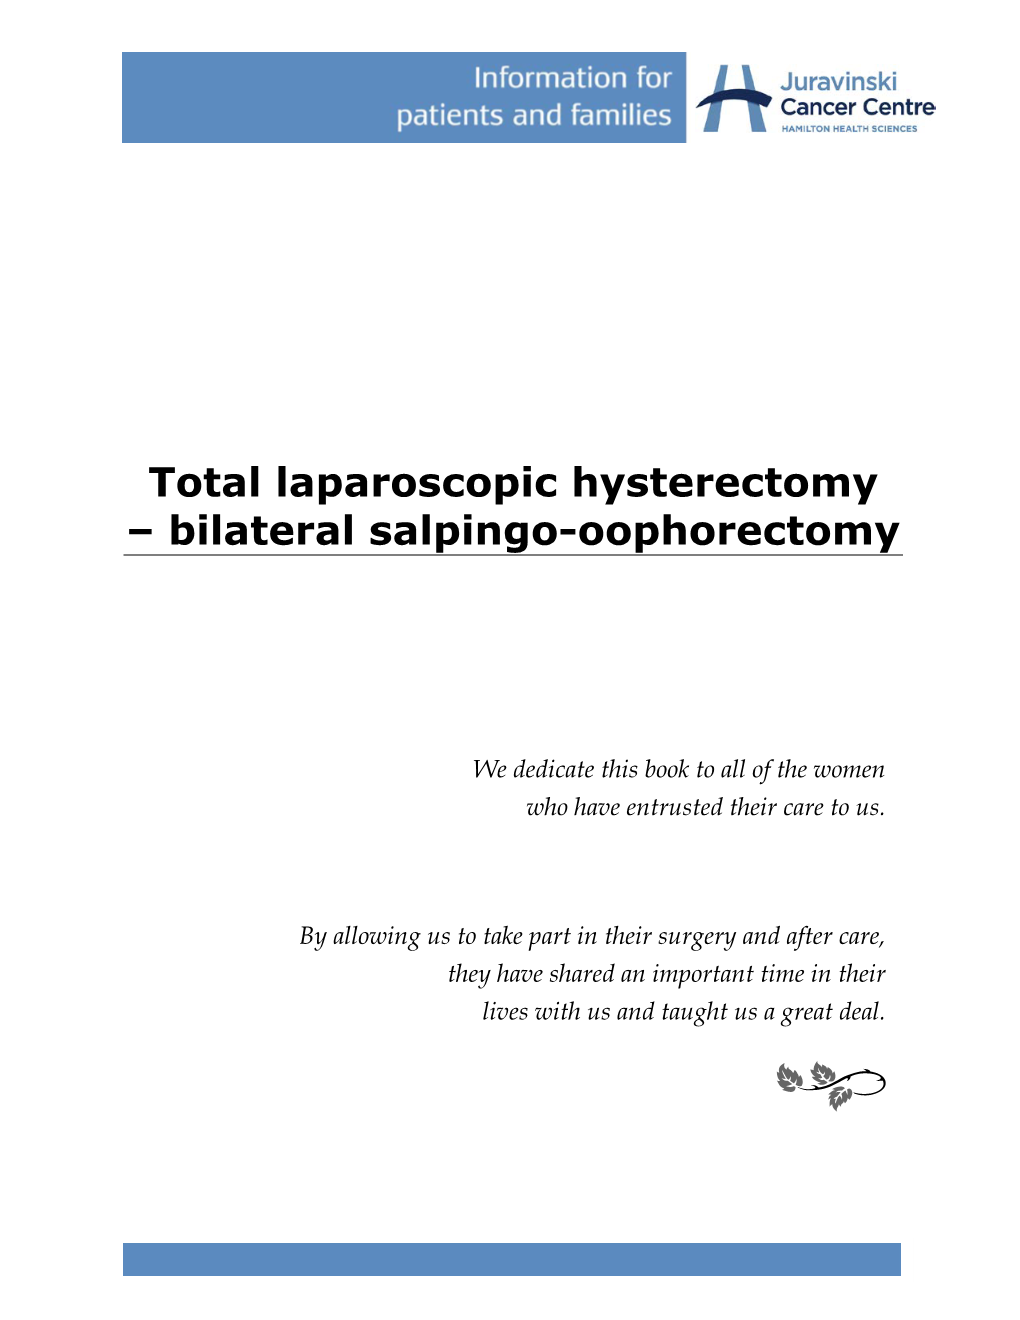 Total Laparoscopic Hysterectomy – Bilateral Salpingo-Oophorectomy